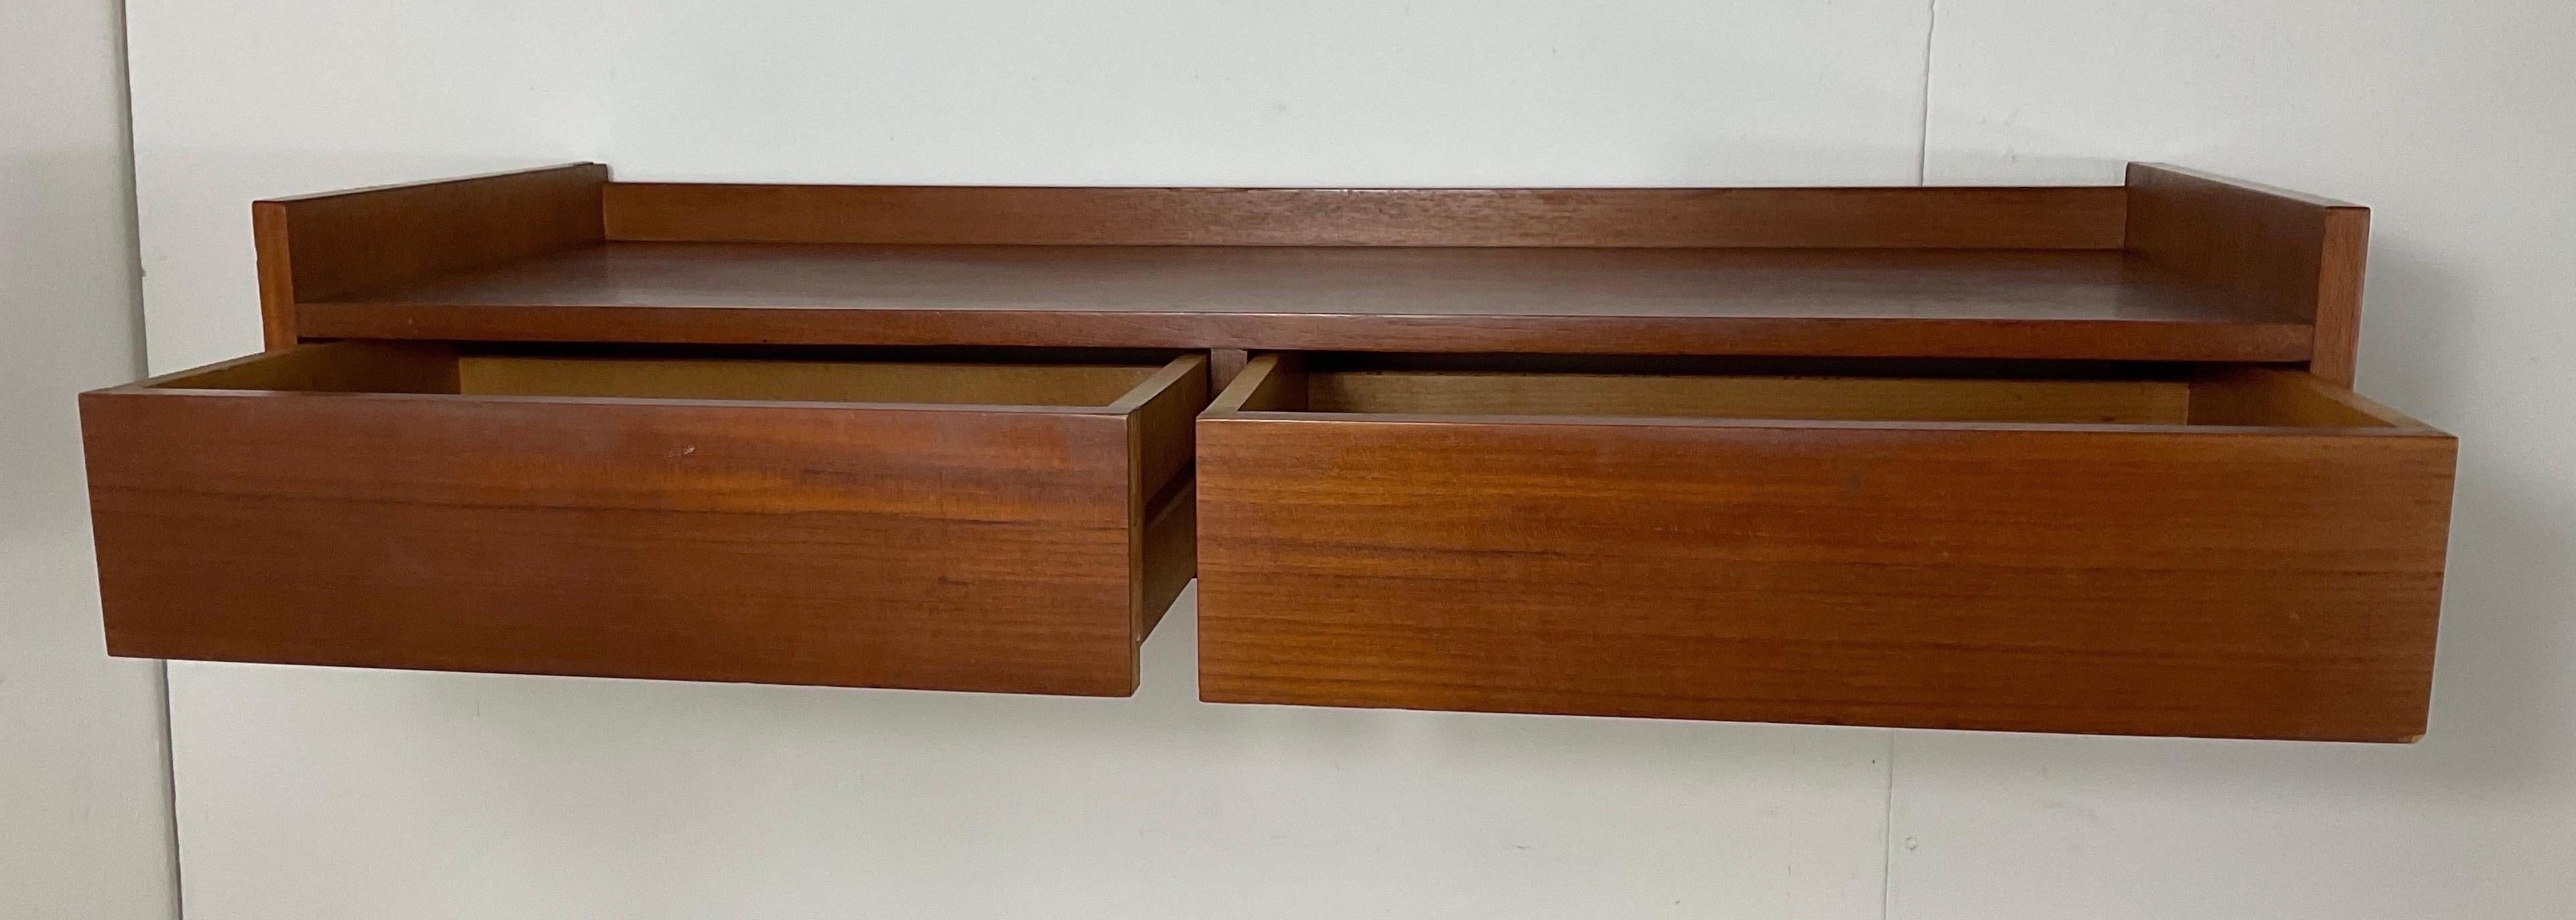 Furted wood wall console attributable to Osvaldo Borsani For Sale 9